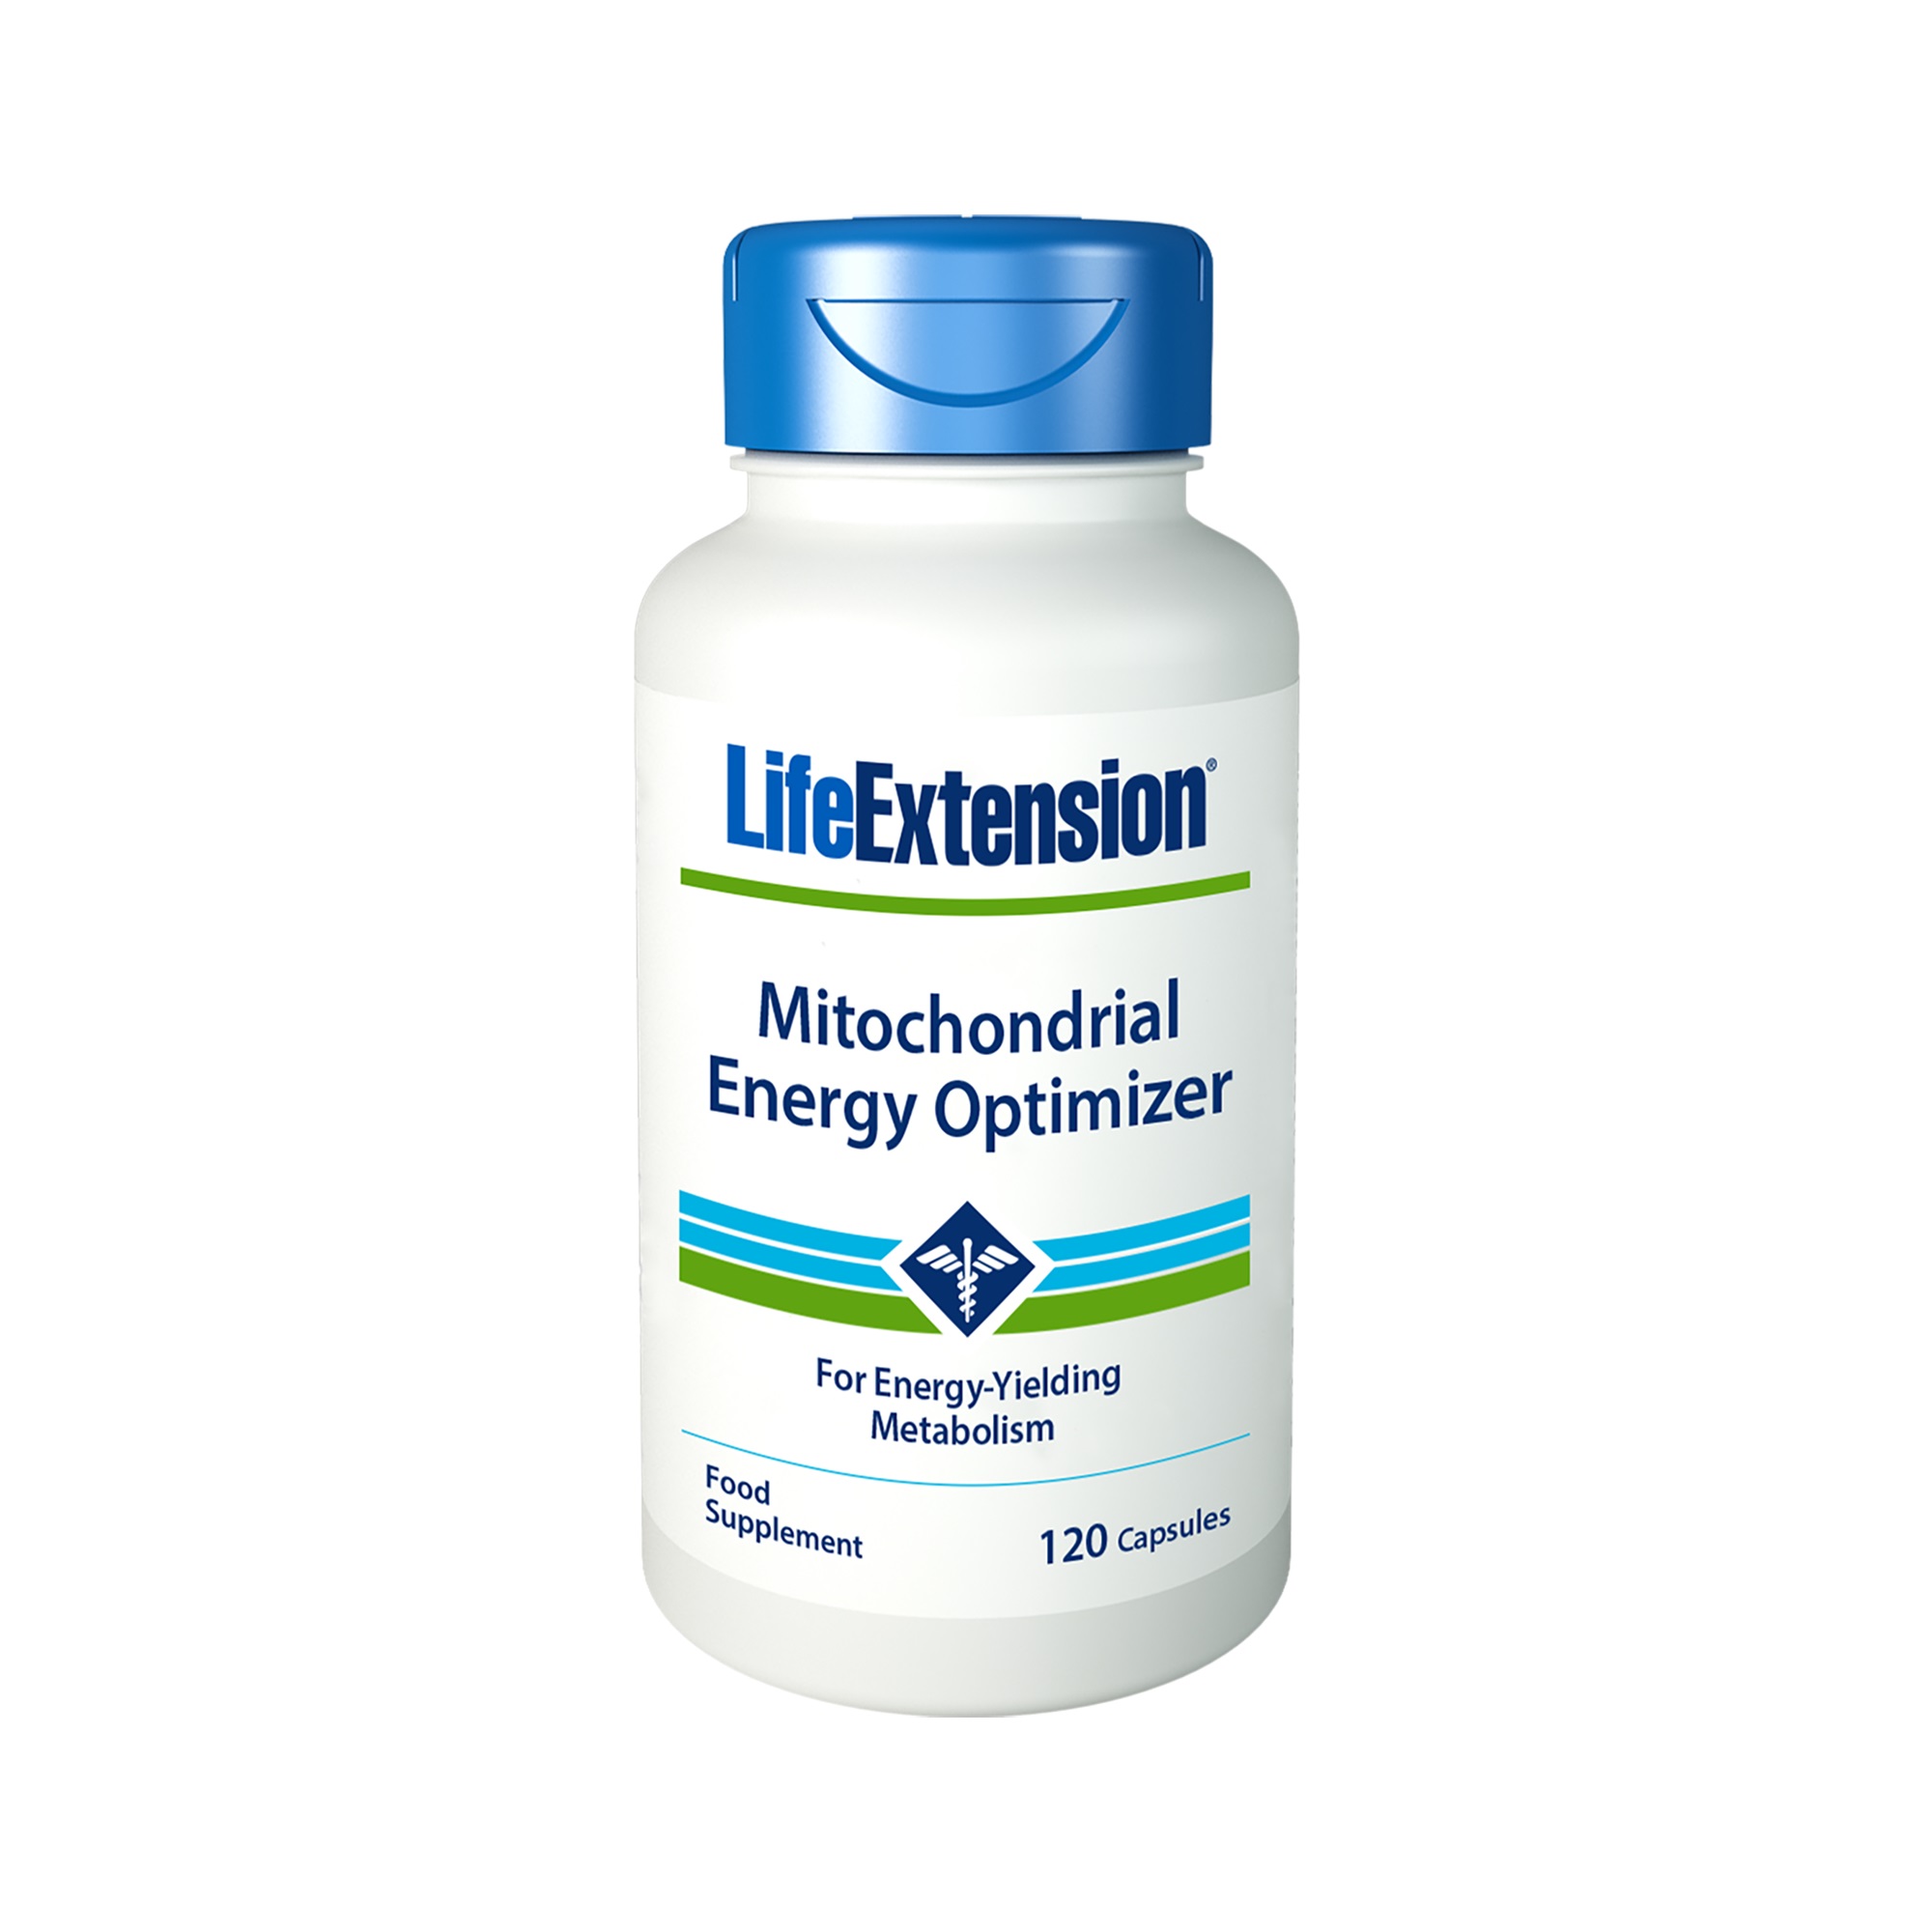 LifeExtension Mitochondrial Energy Optimizer